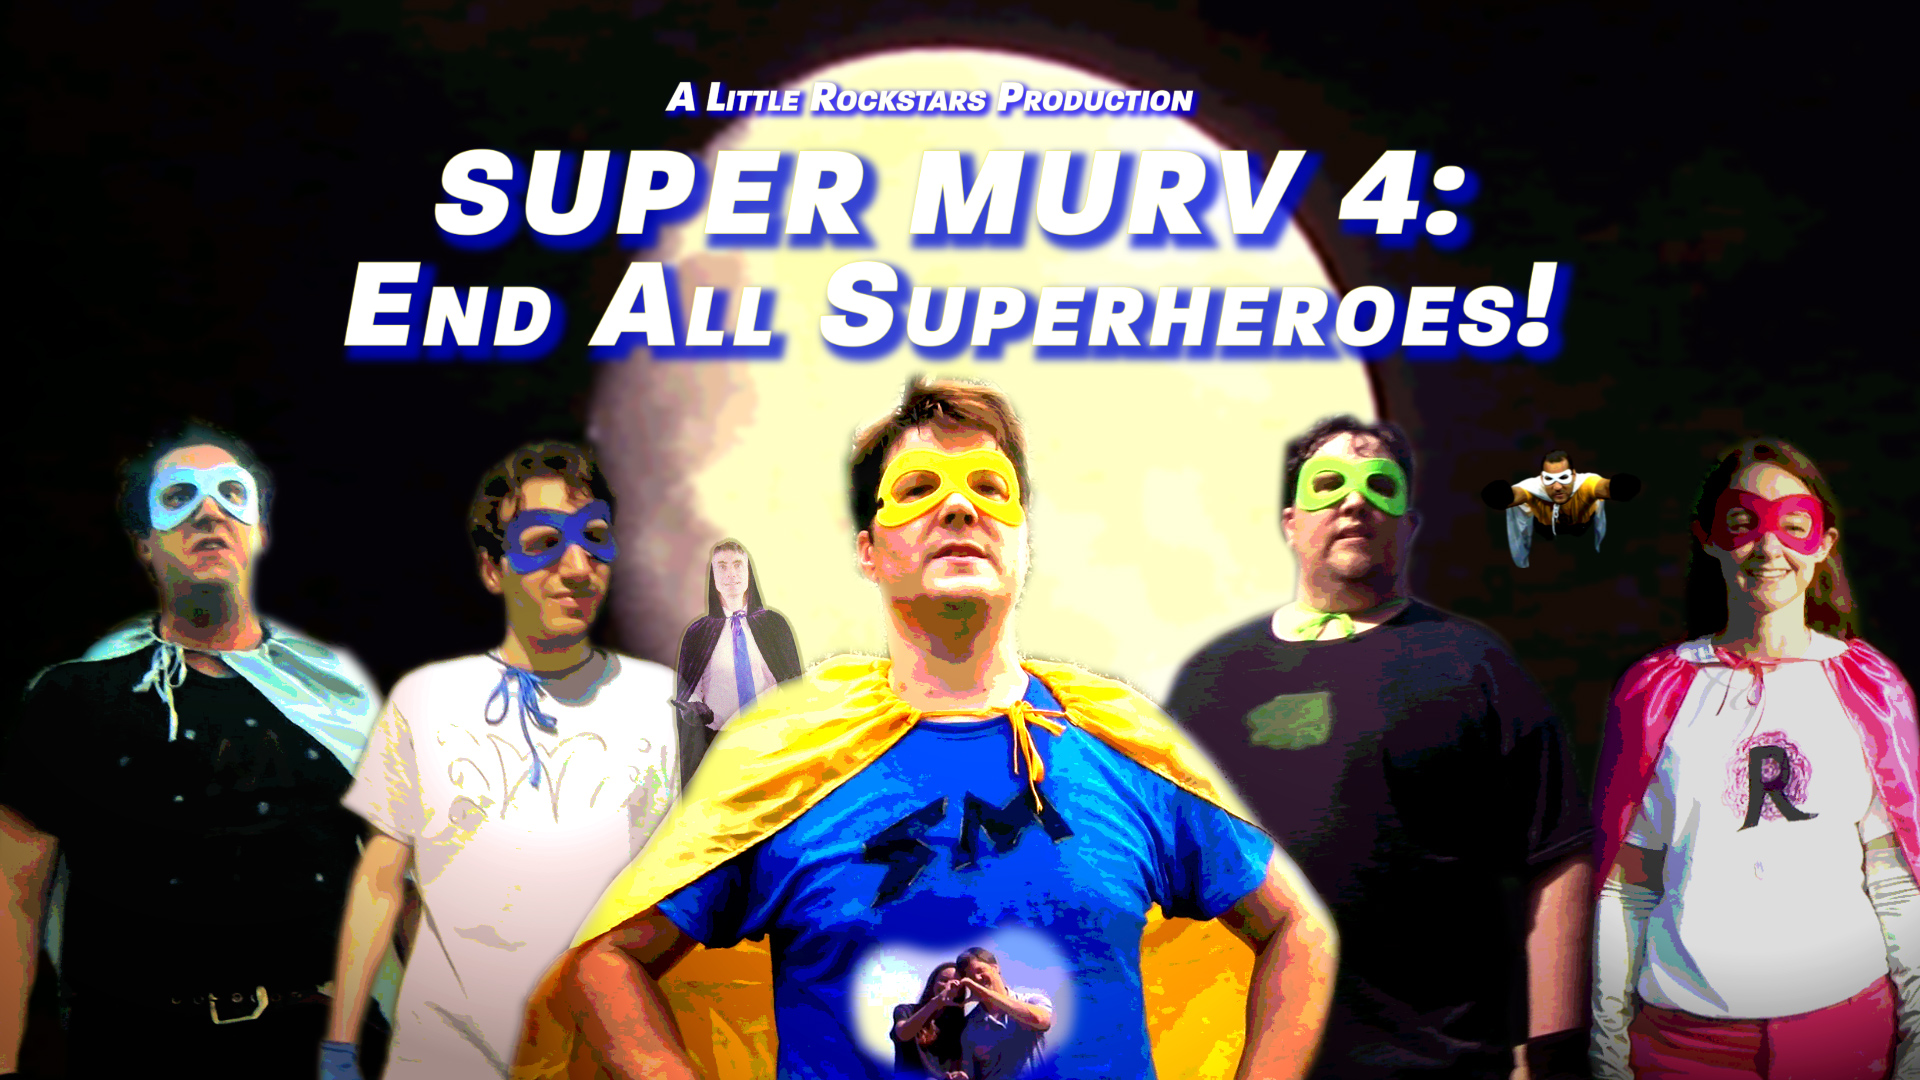 Super Murv 4: End All Superheroes!